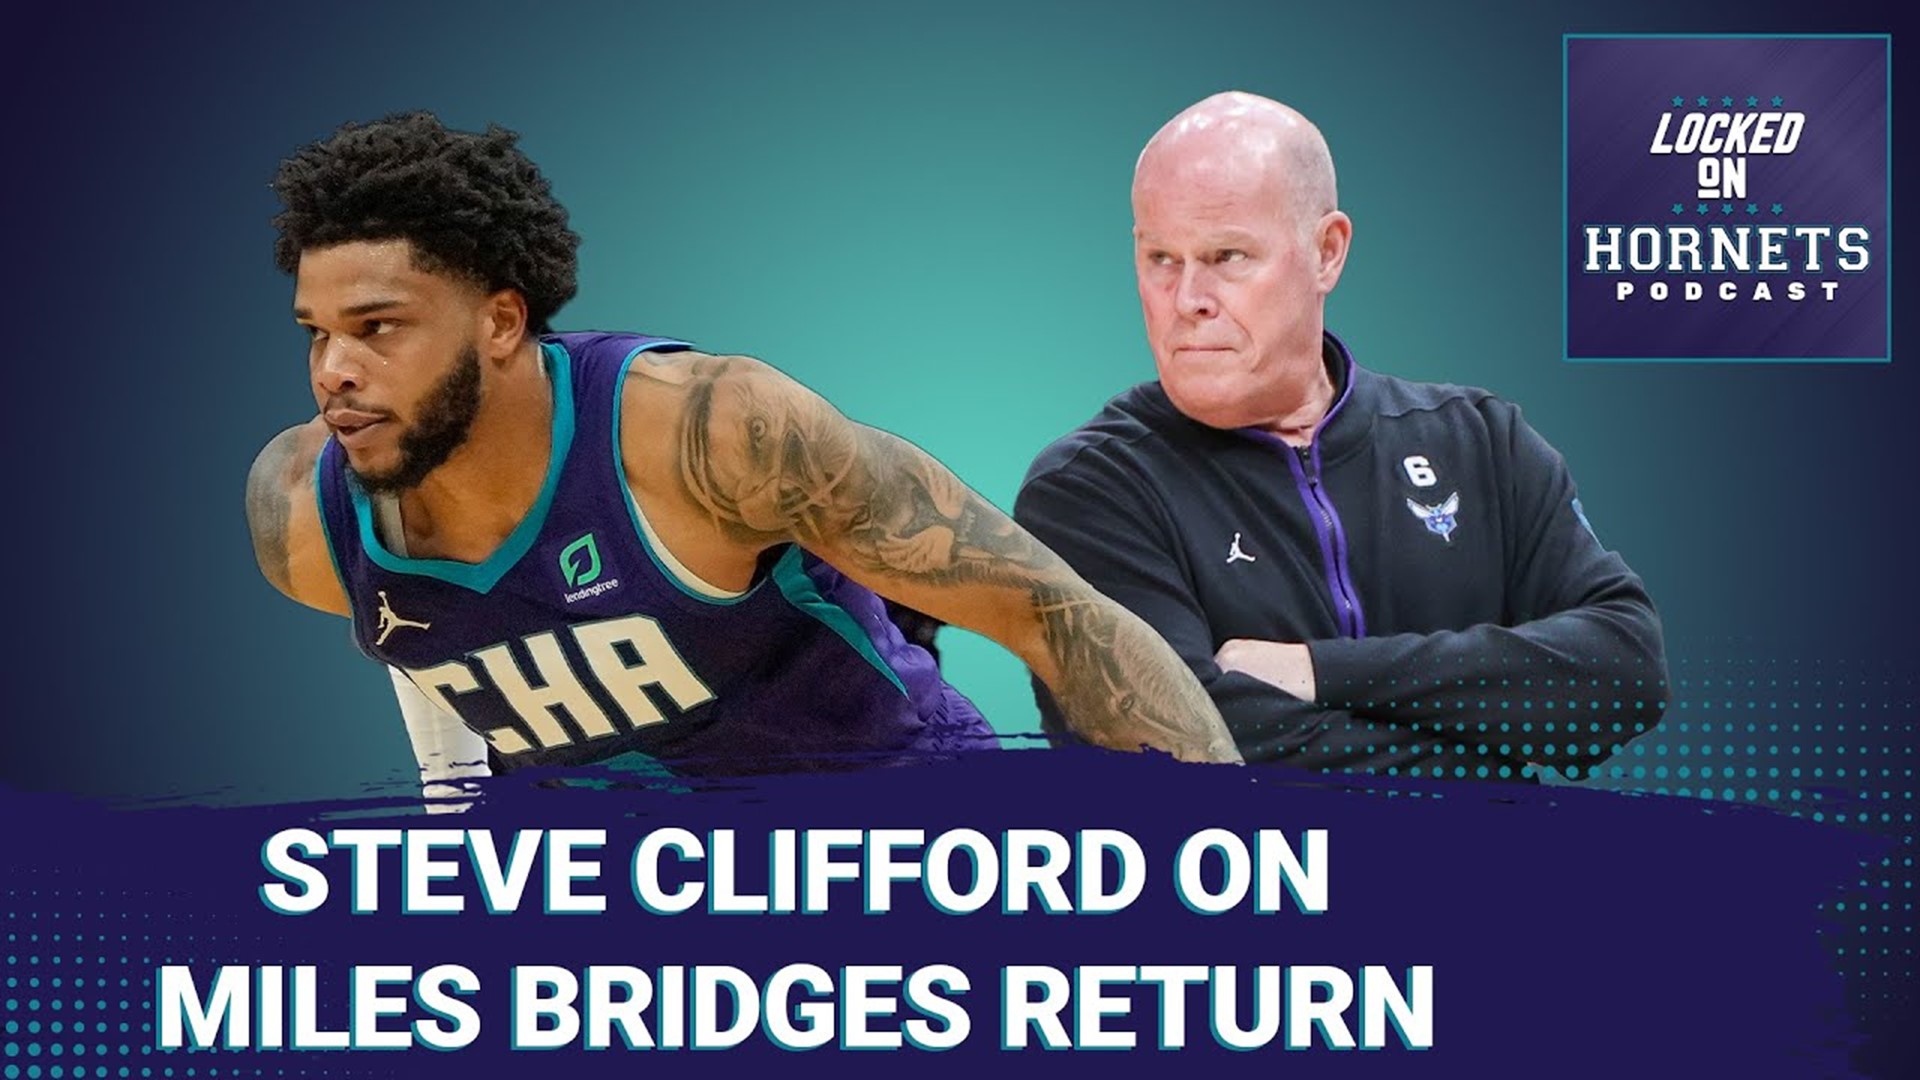 Steve Clifford on Miles Bridges return PLUS, LaMelo Ball continues his hot streak